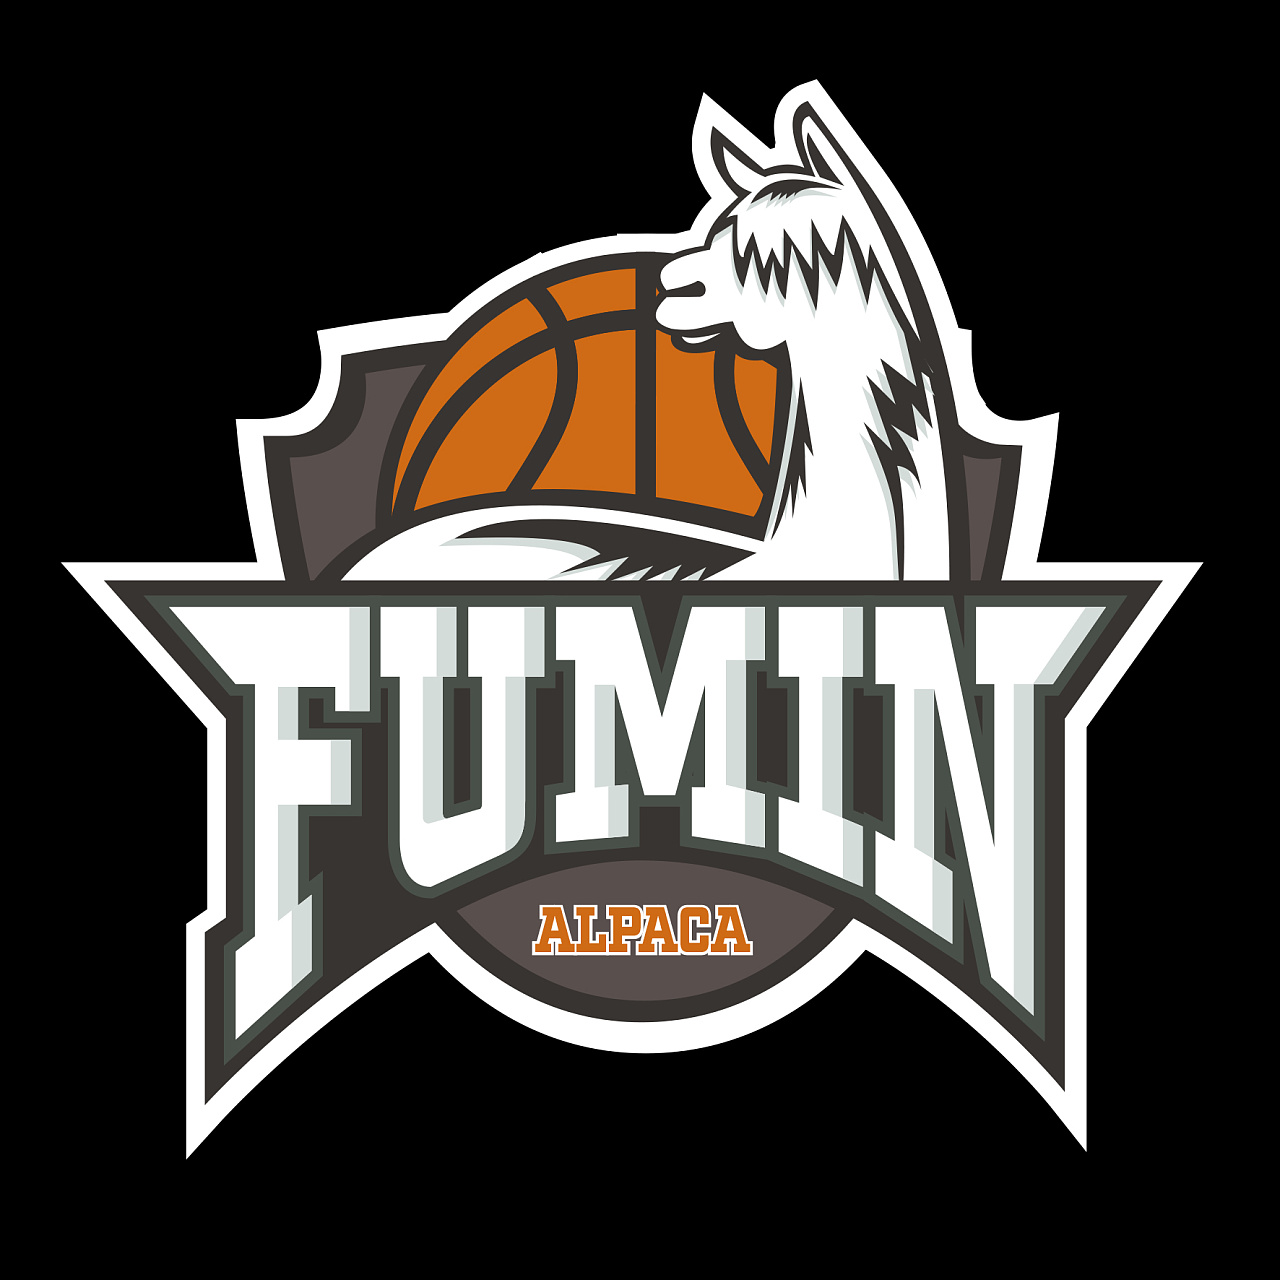 篮球logo设计 霸气图片